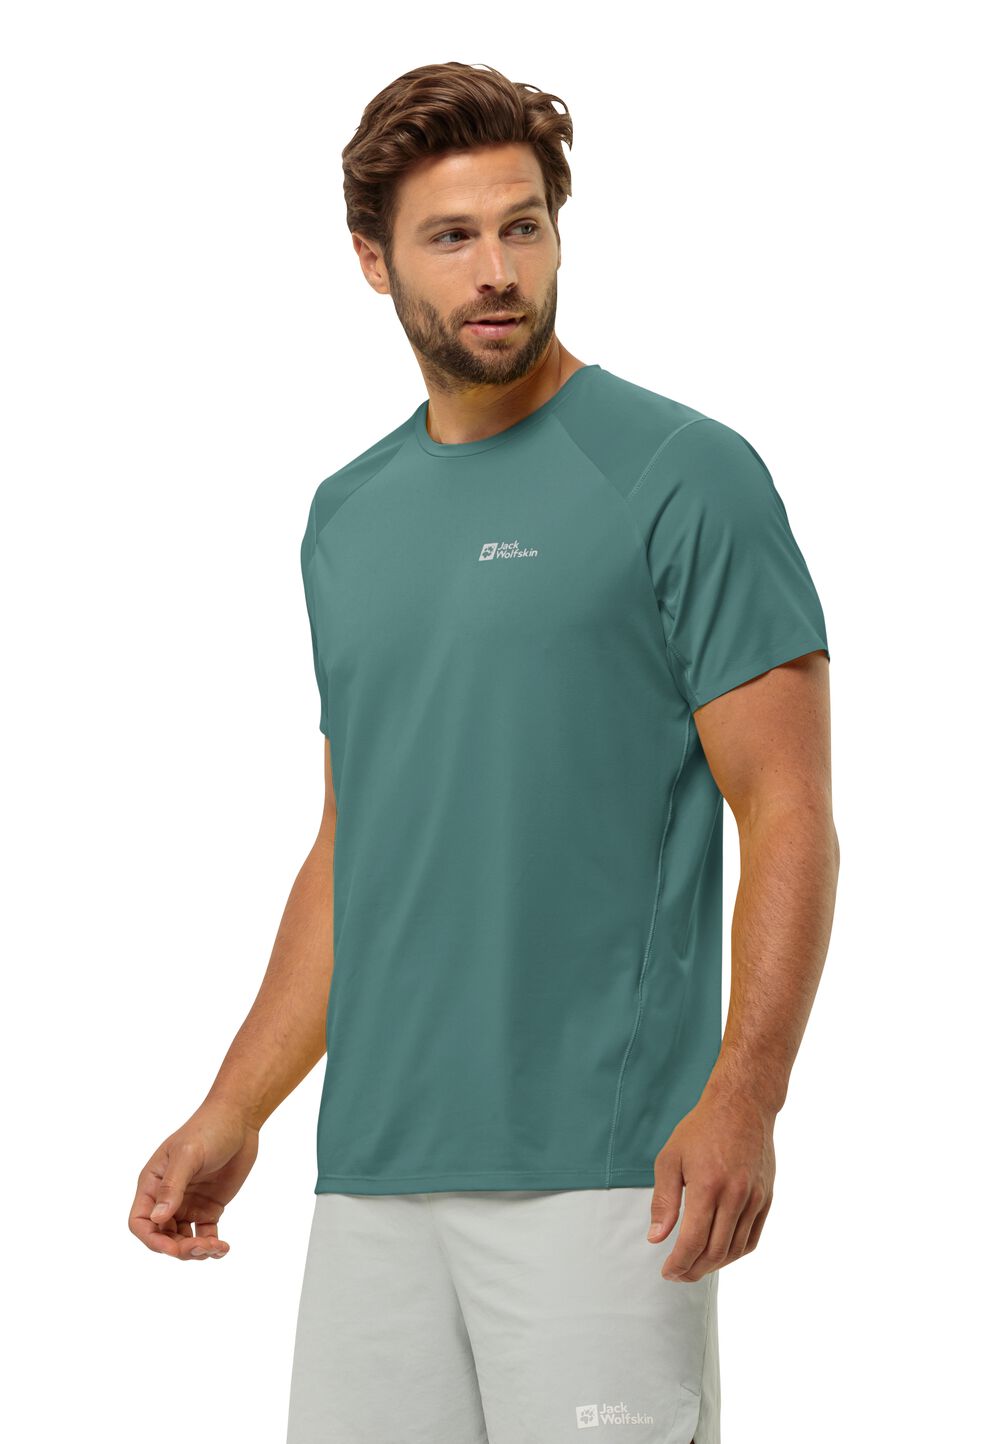 Jack Wolfskin Prelight Chill T-Shirt Men Functioneel shirt Heren L jade green jade green